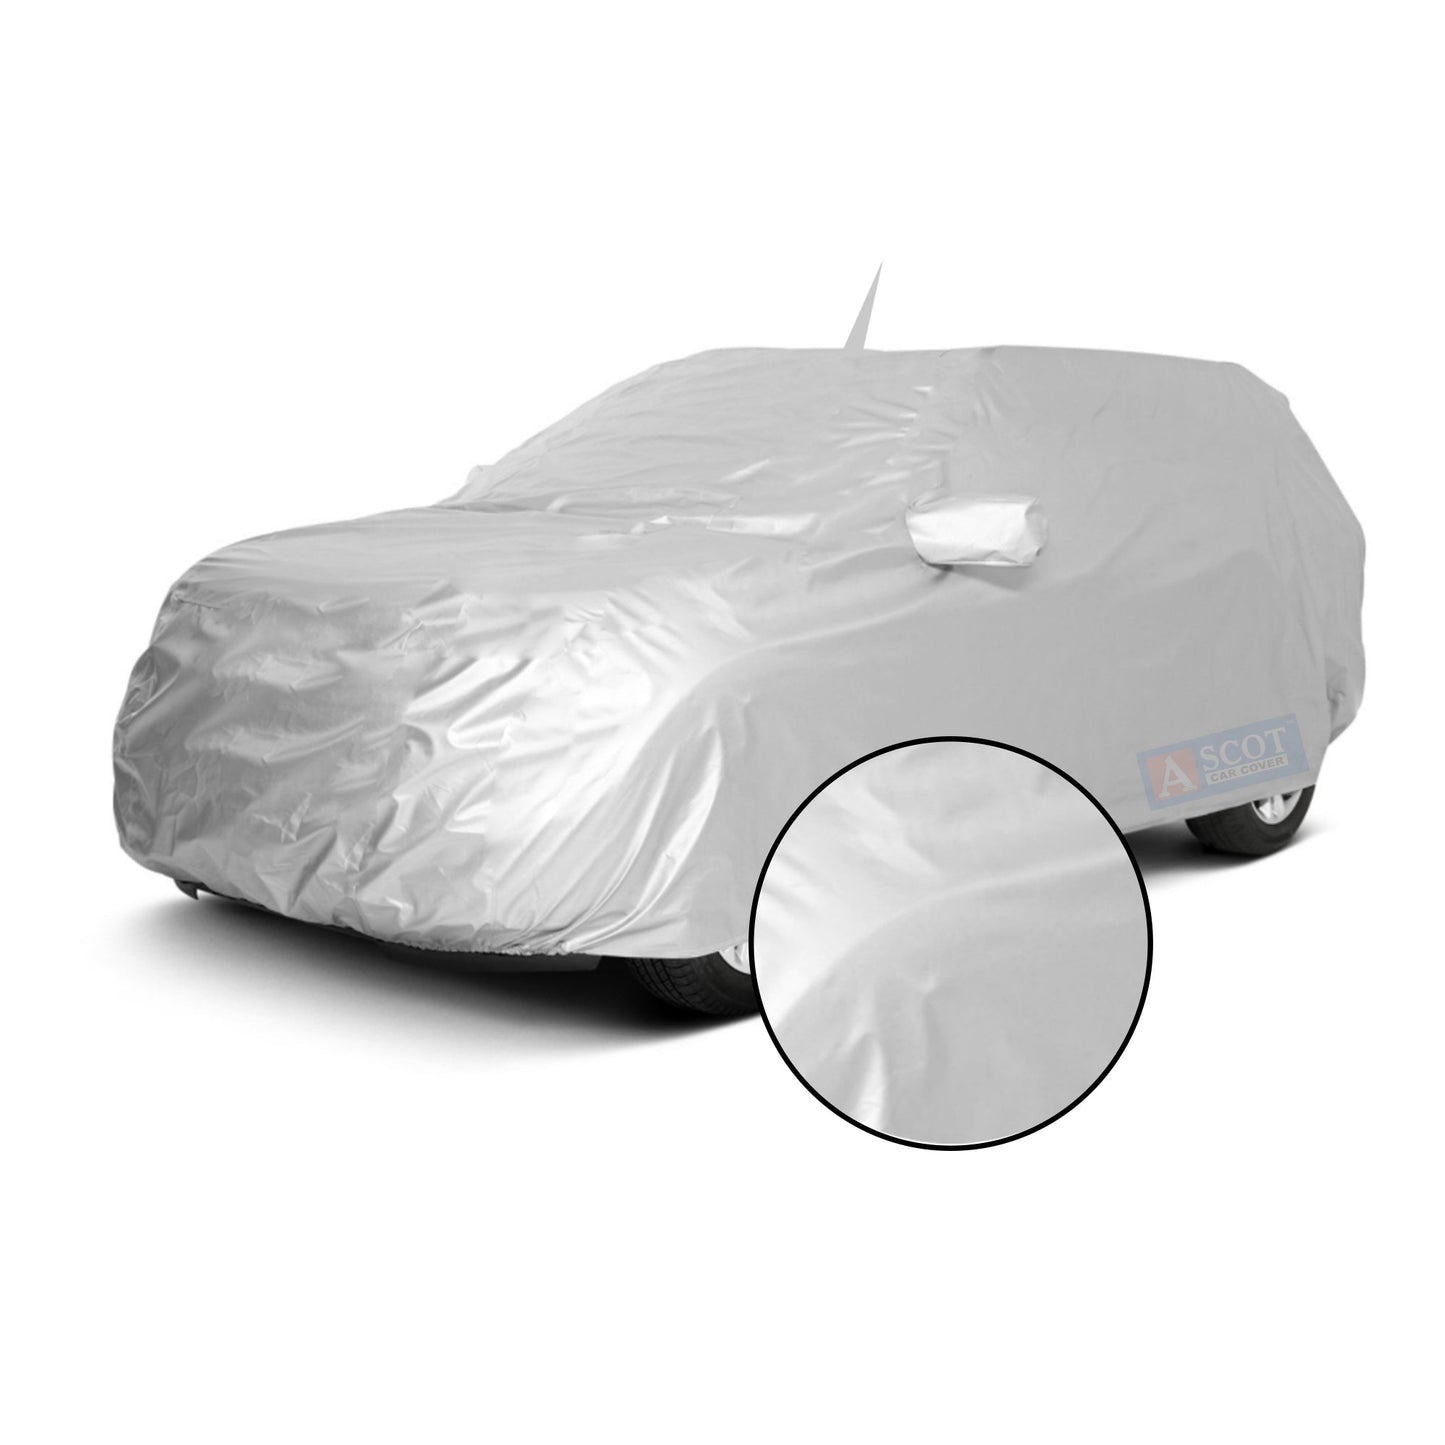 Ascot Maruti Suzuki Celerio Car Body Cover 2021-2023 Model Dust Proof, Trippel Stitched